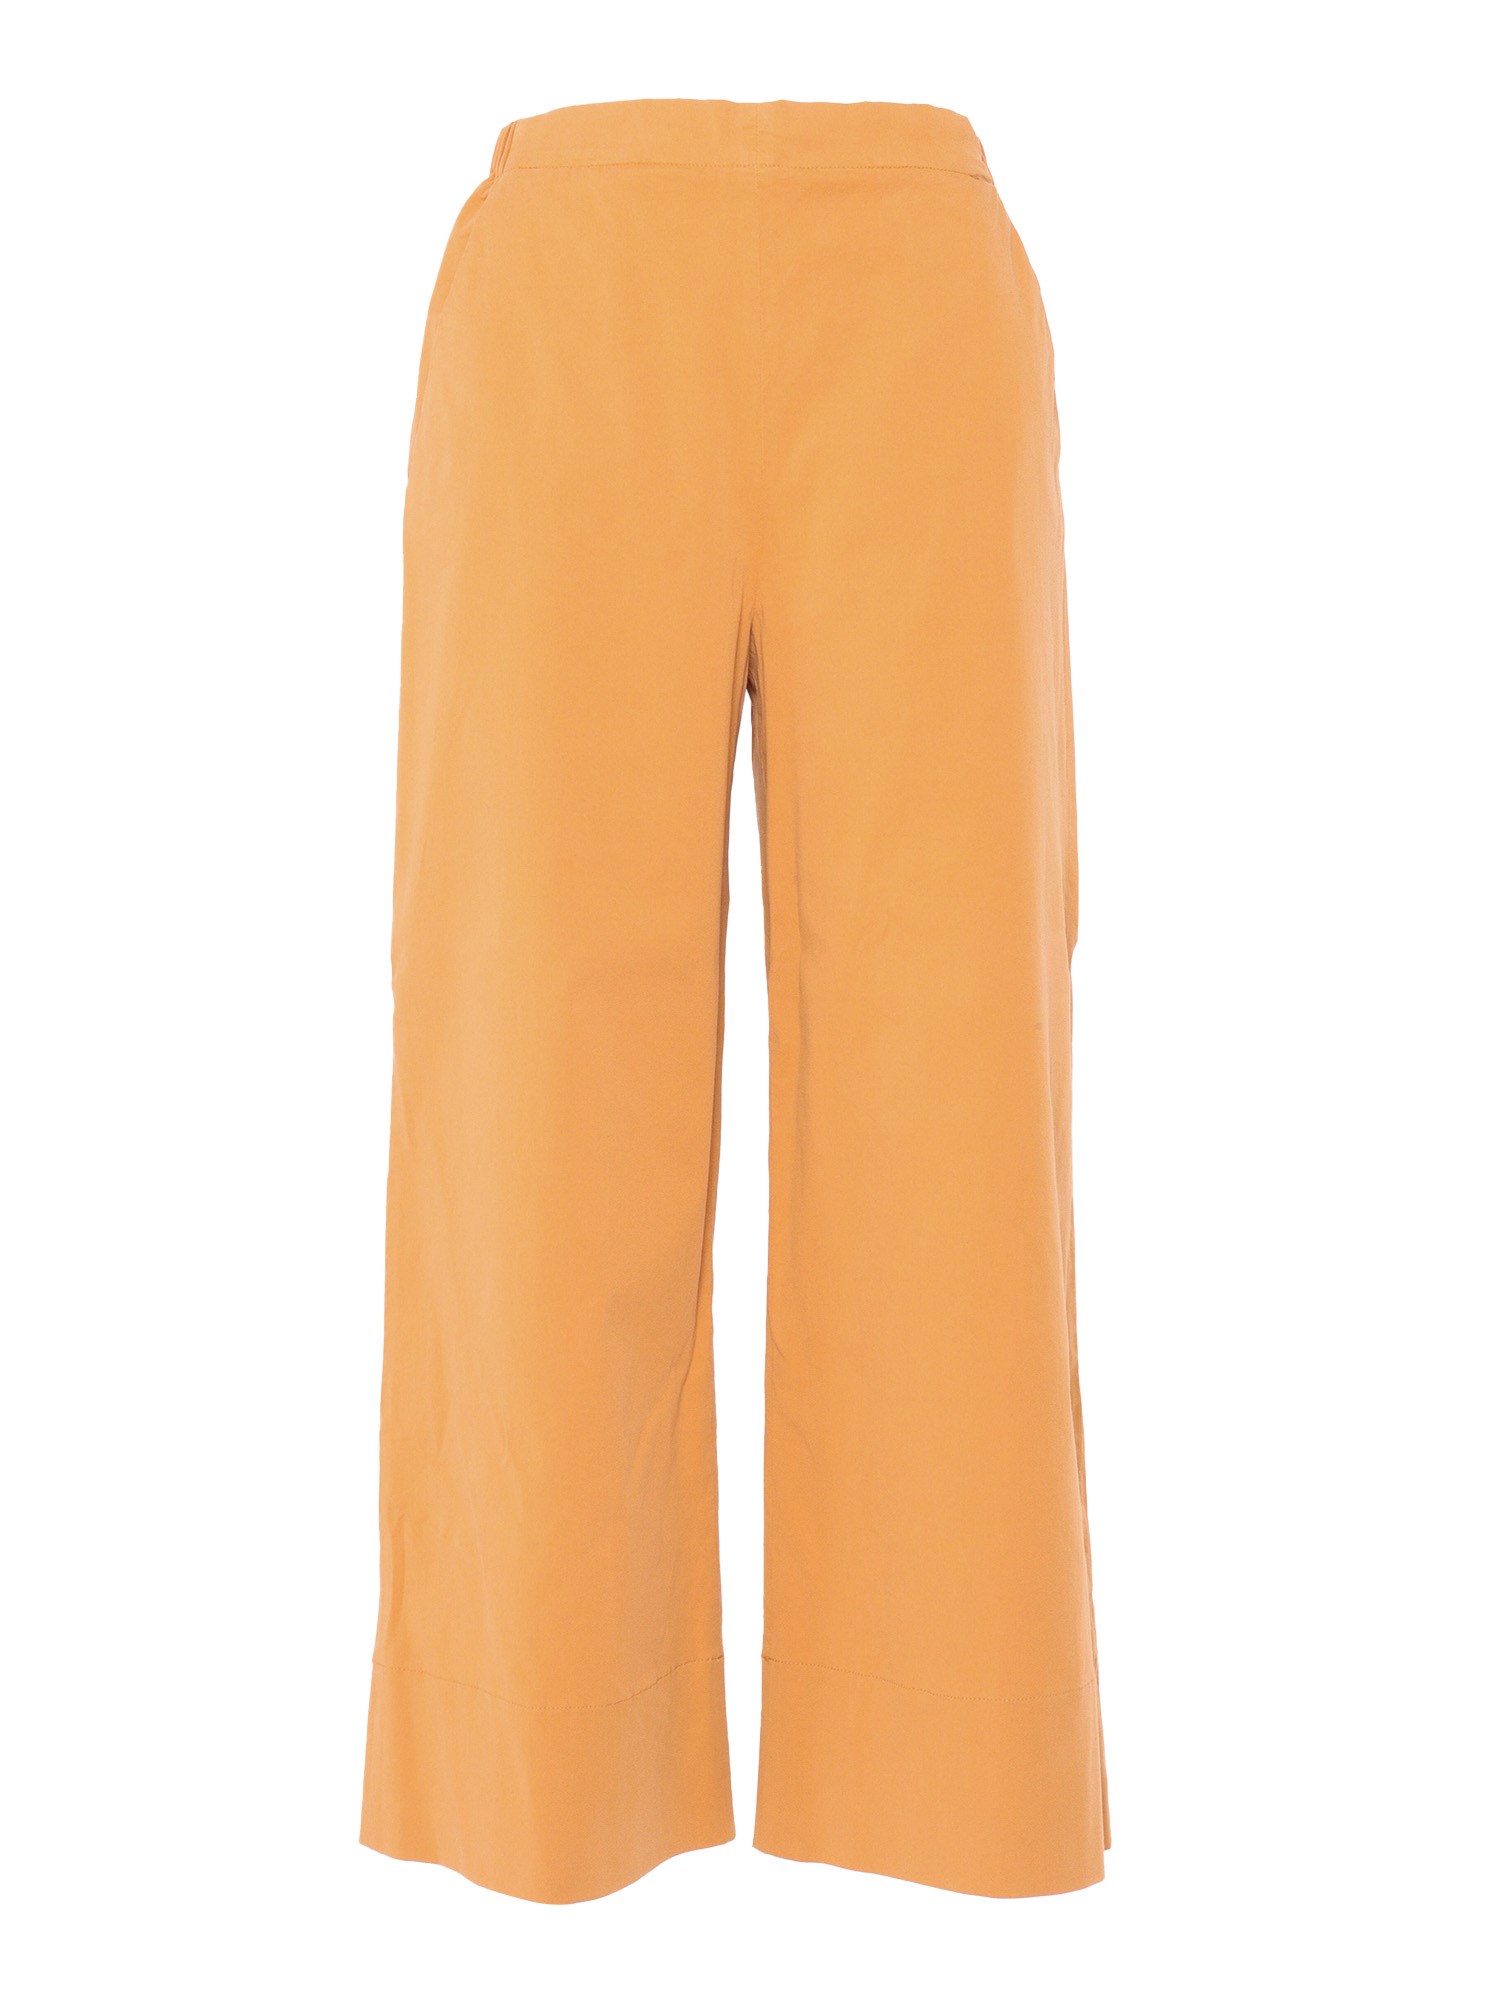 Antonelli Firenze Orange Trousers